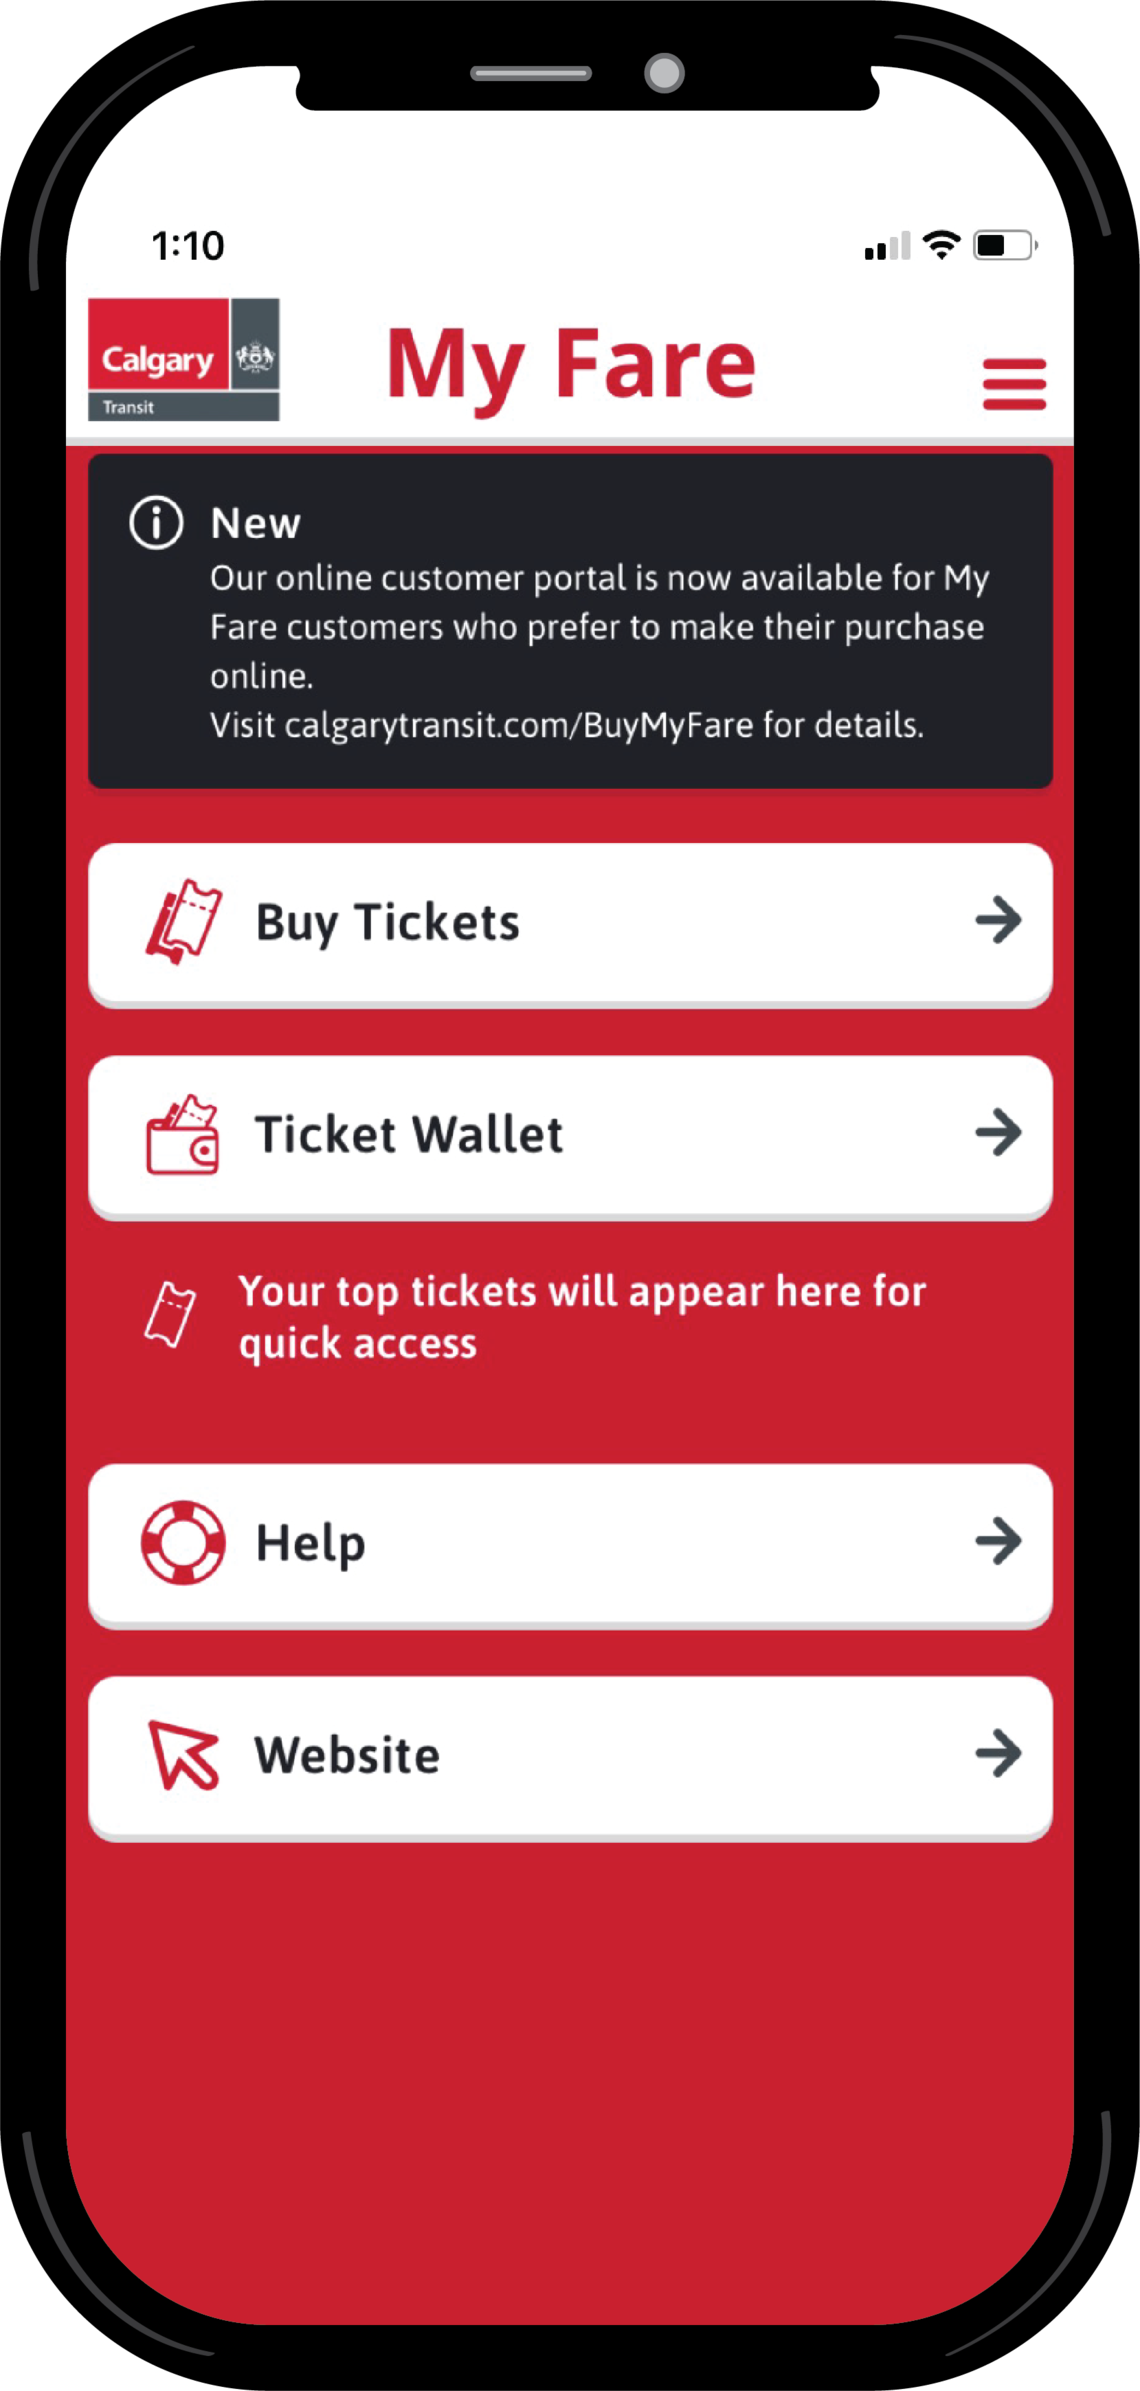 My Fare App Menu: Buy Tickets, Ticket Wallet, Help, Website